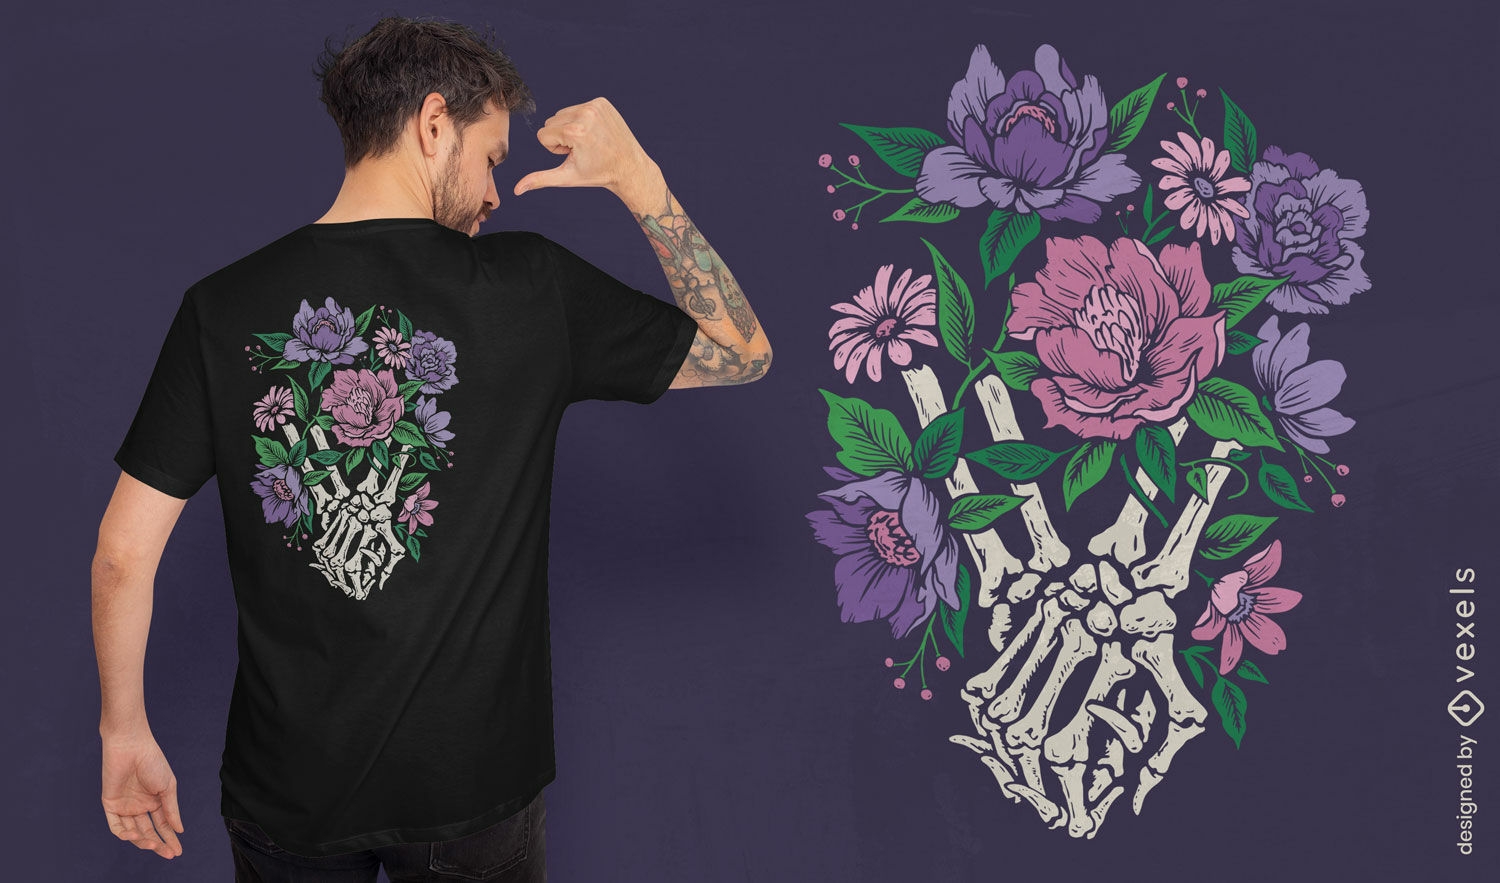 Skeleton couple hands flowers t-shirt design